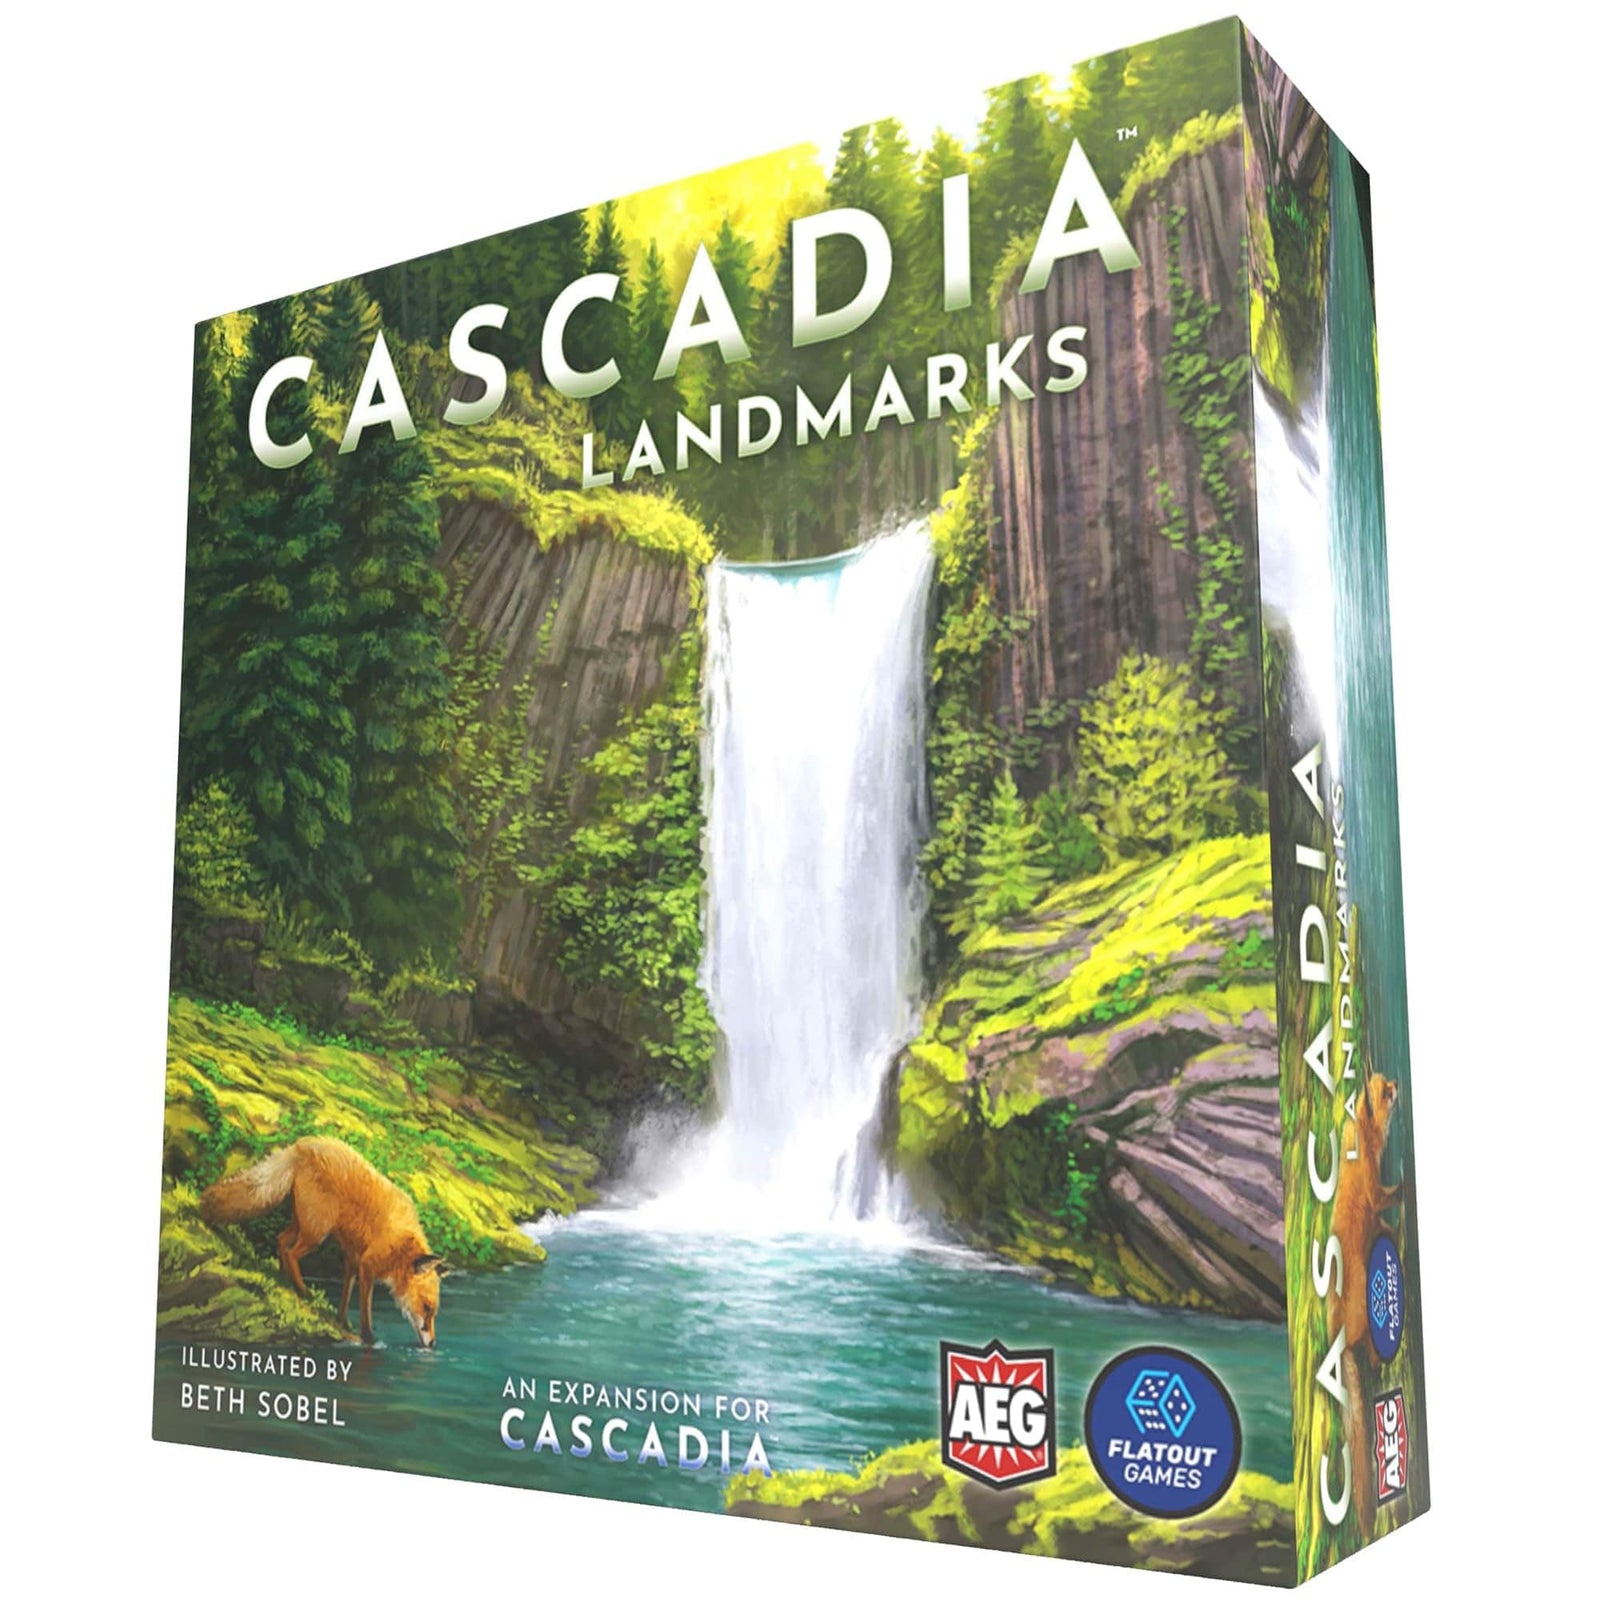 Alderac Entertainment Group Board Games Alderac Entertainment Group Cascadia: Landmarks Expansion